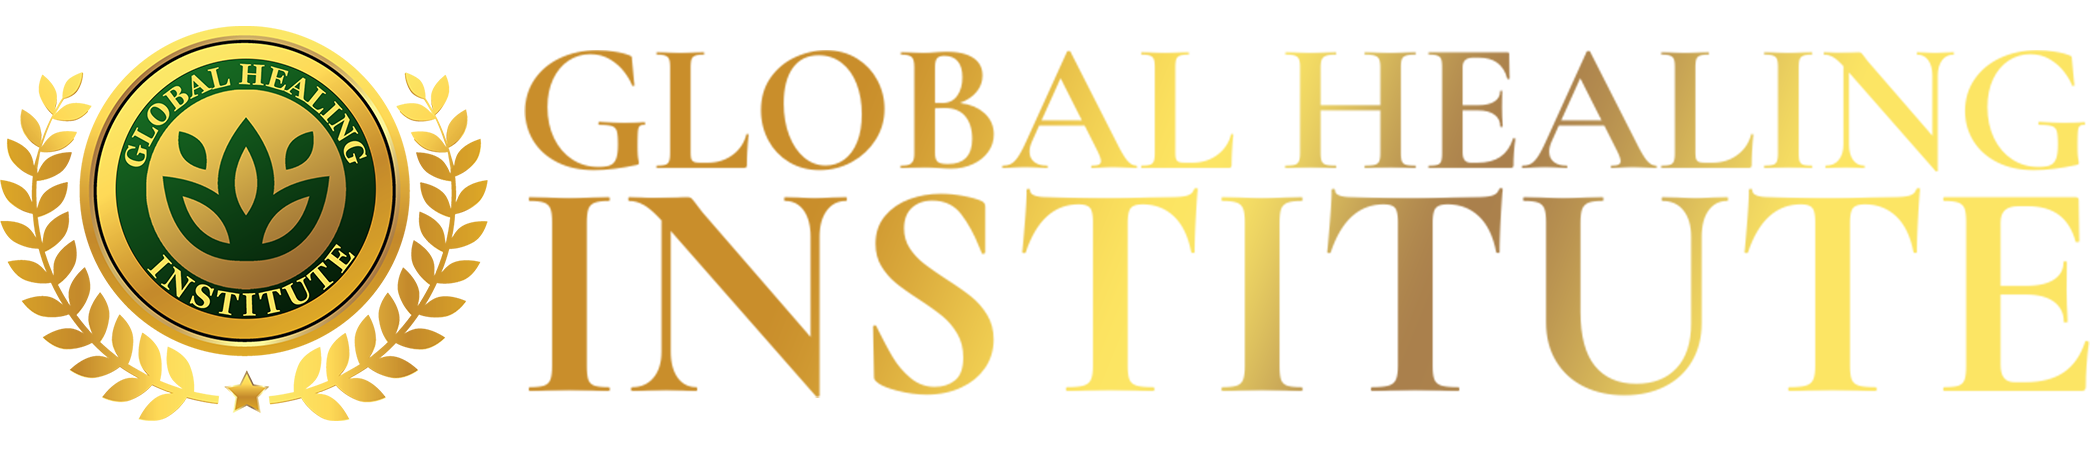 Global Healing Institute Logo